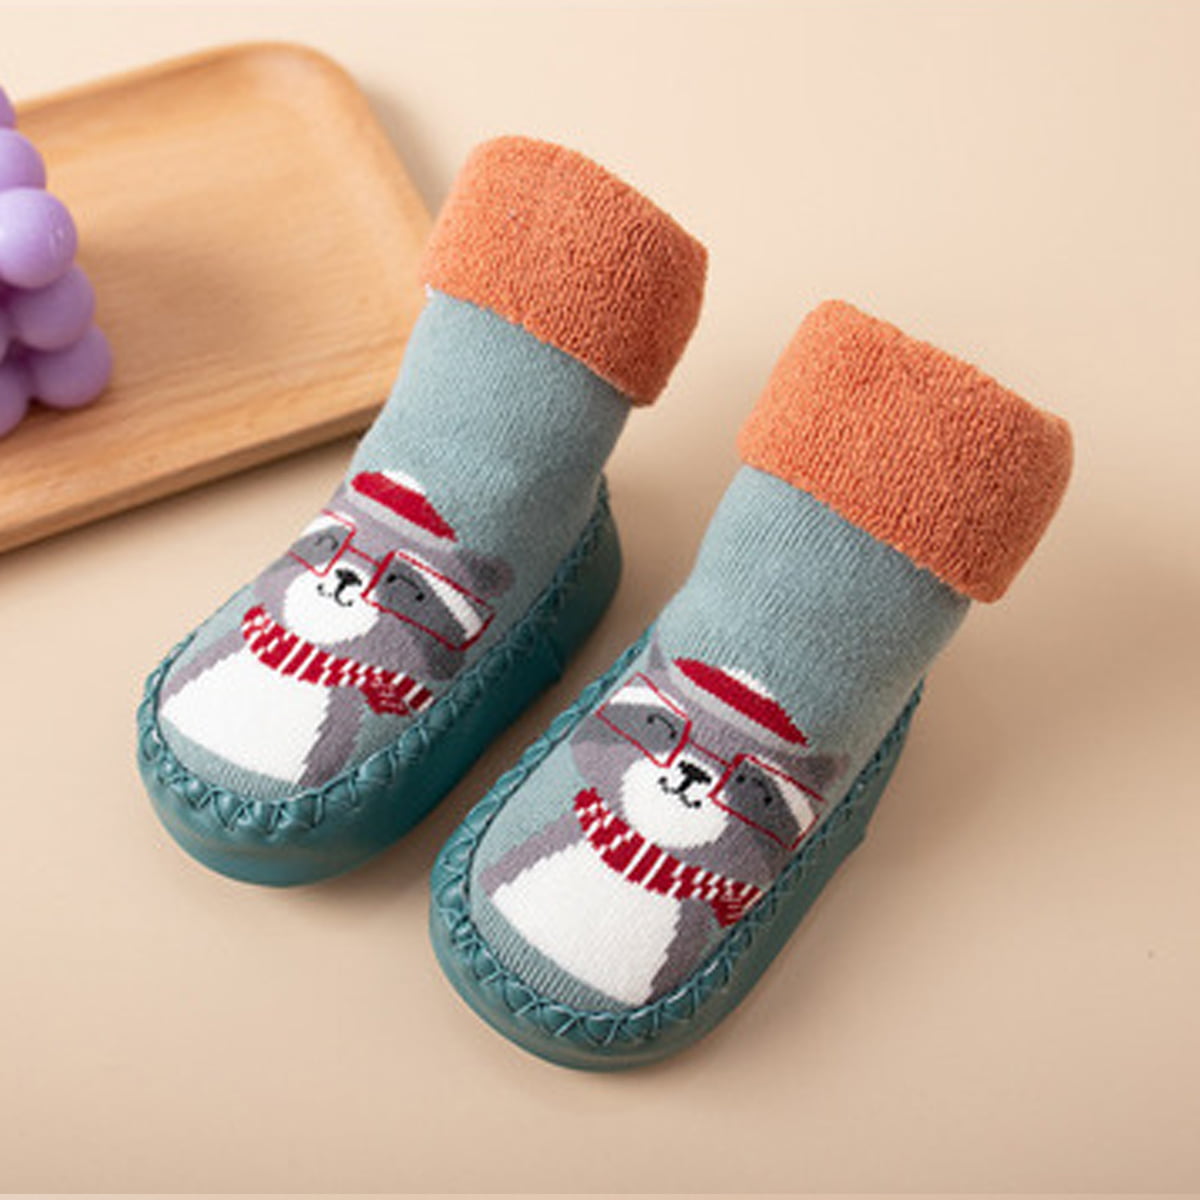 Eocom Baby Boy Girls Toddlers Moccasins Non-Skid Indoor Slipper Shoes Socks 